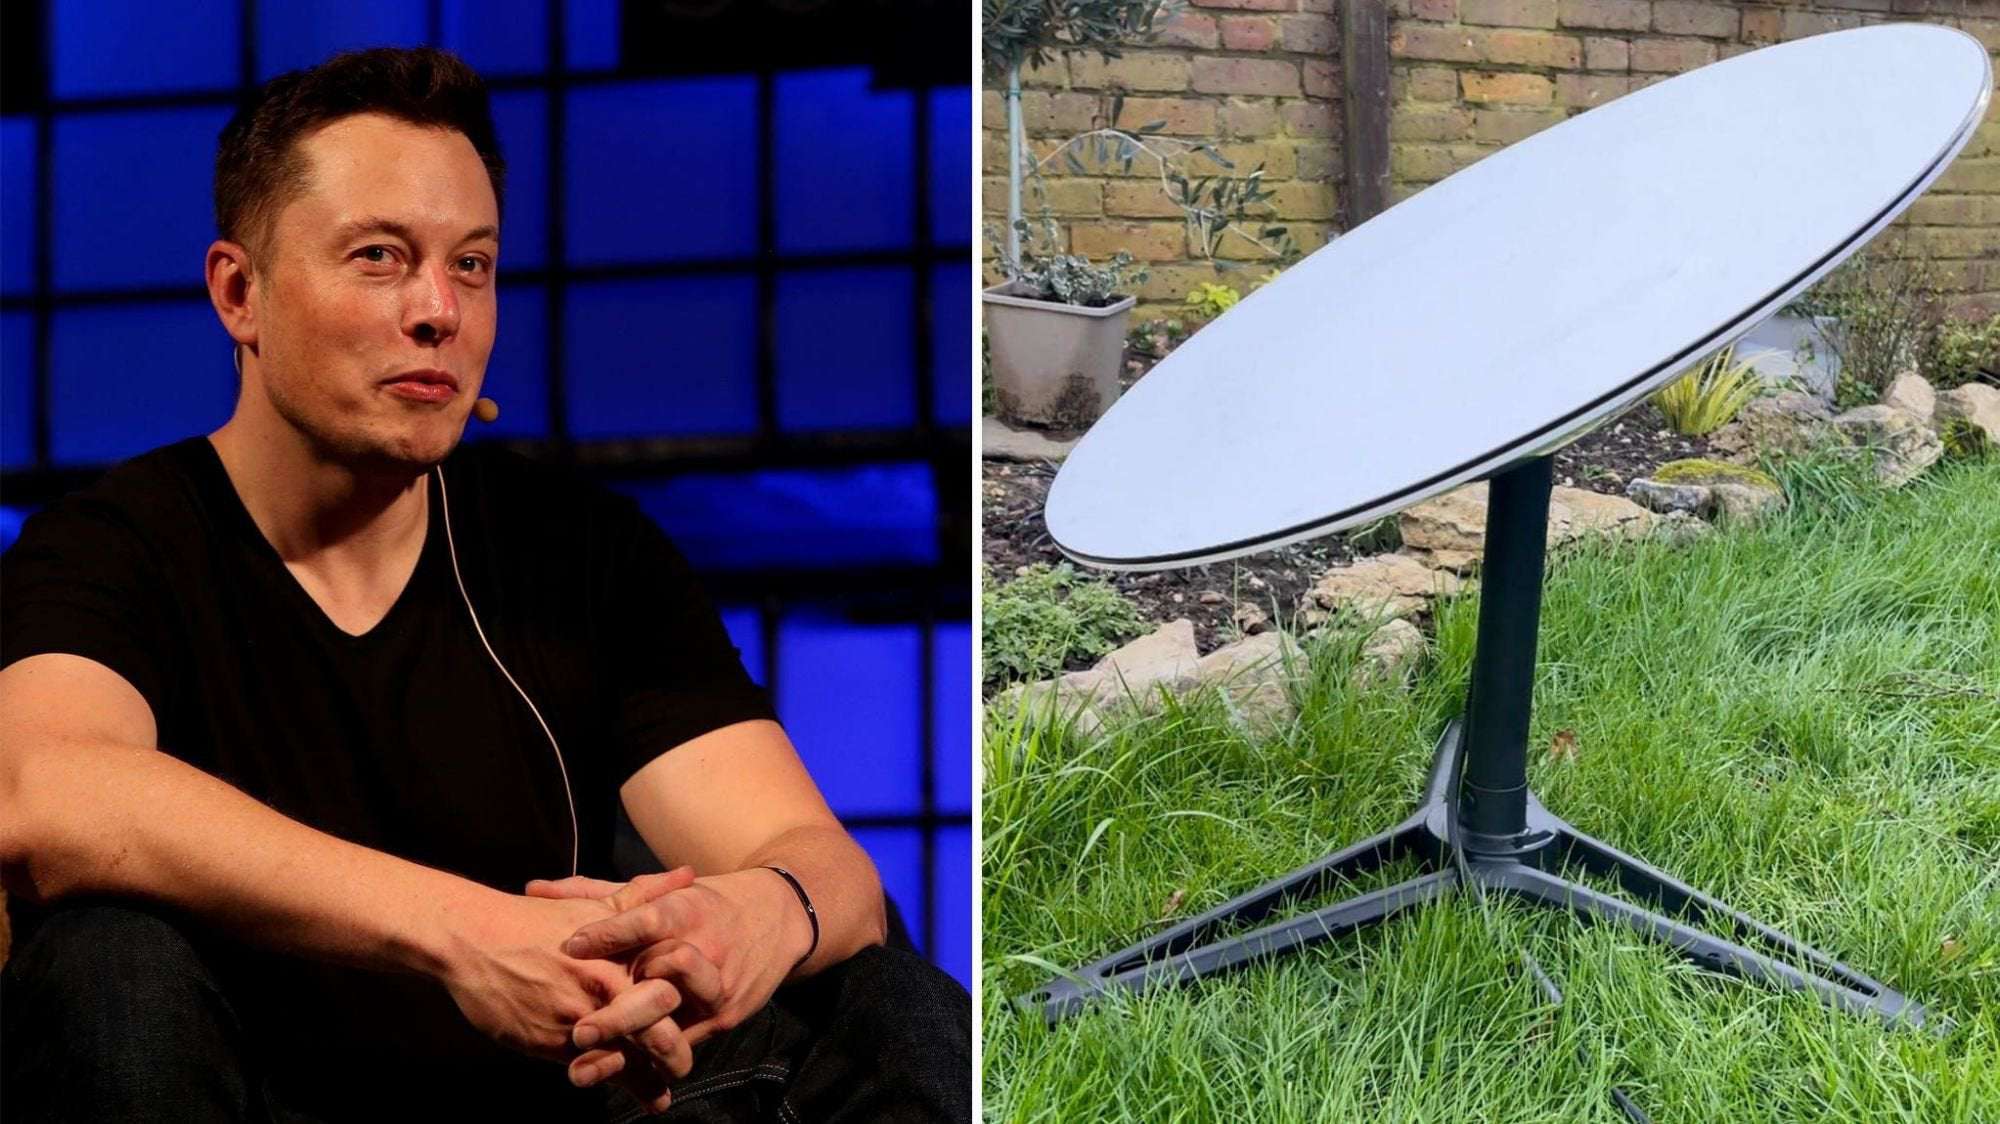 image for Rural users testing Elon Musk’s satellite broadband reveal ‘amazing’ improvement